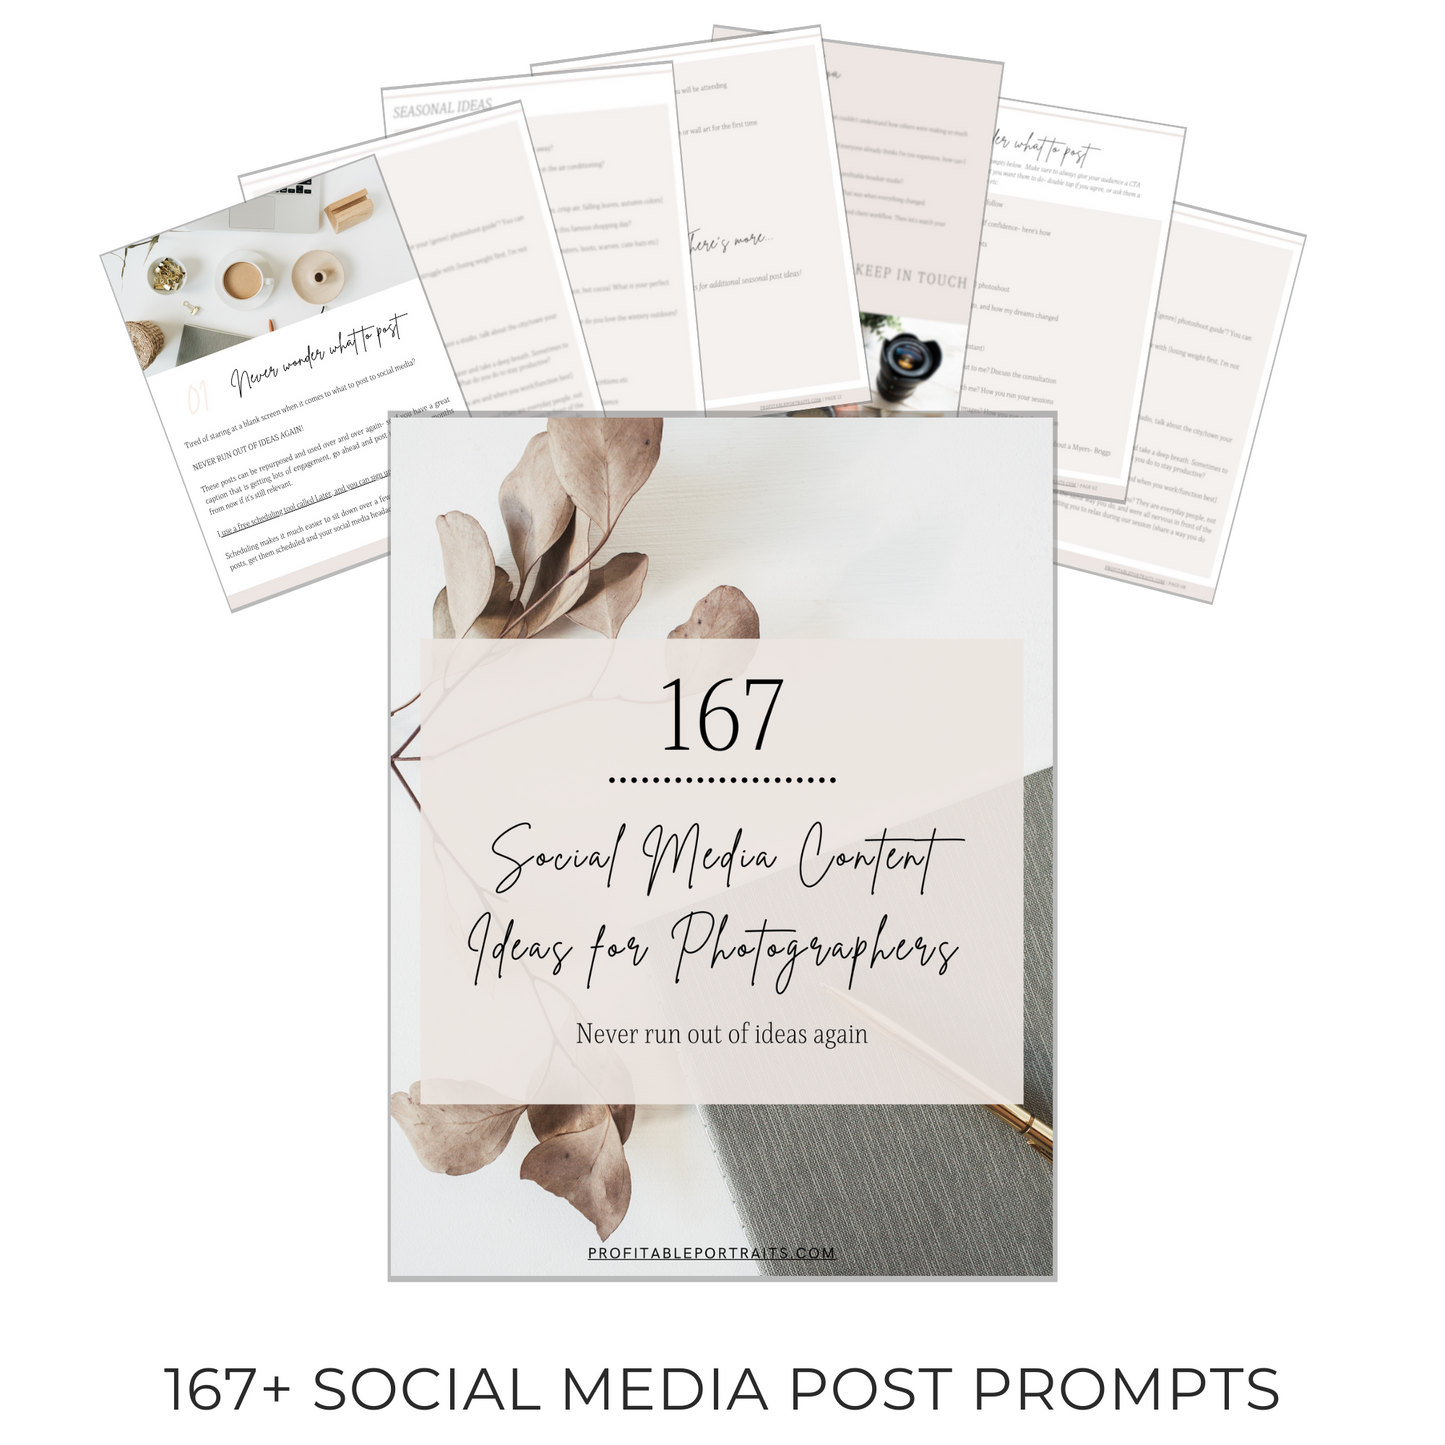 167+ Social Media Post Ideas for Photographers